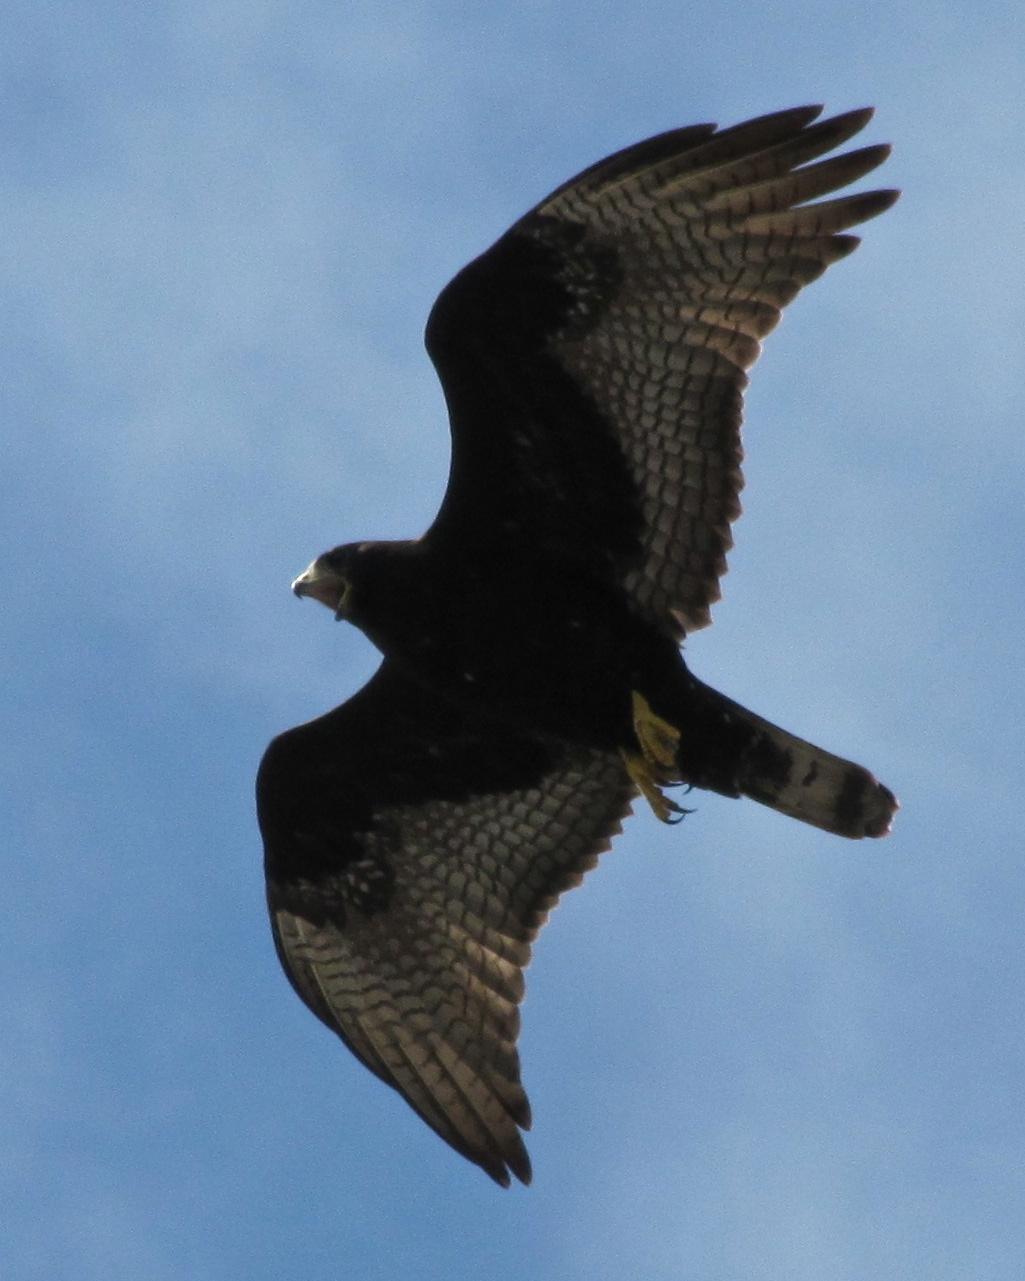 Zone-tailed Hawk Photo by John van Dort